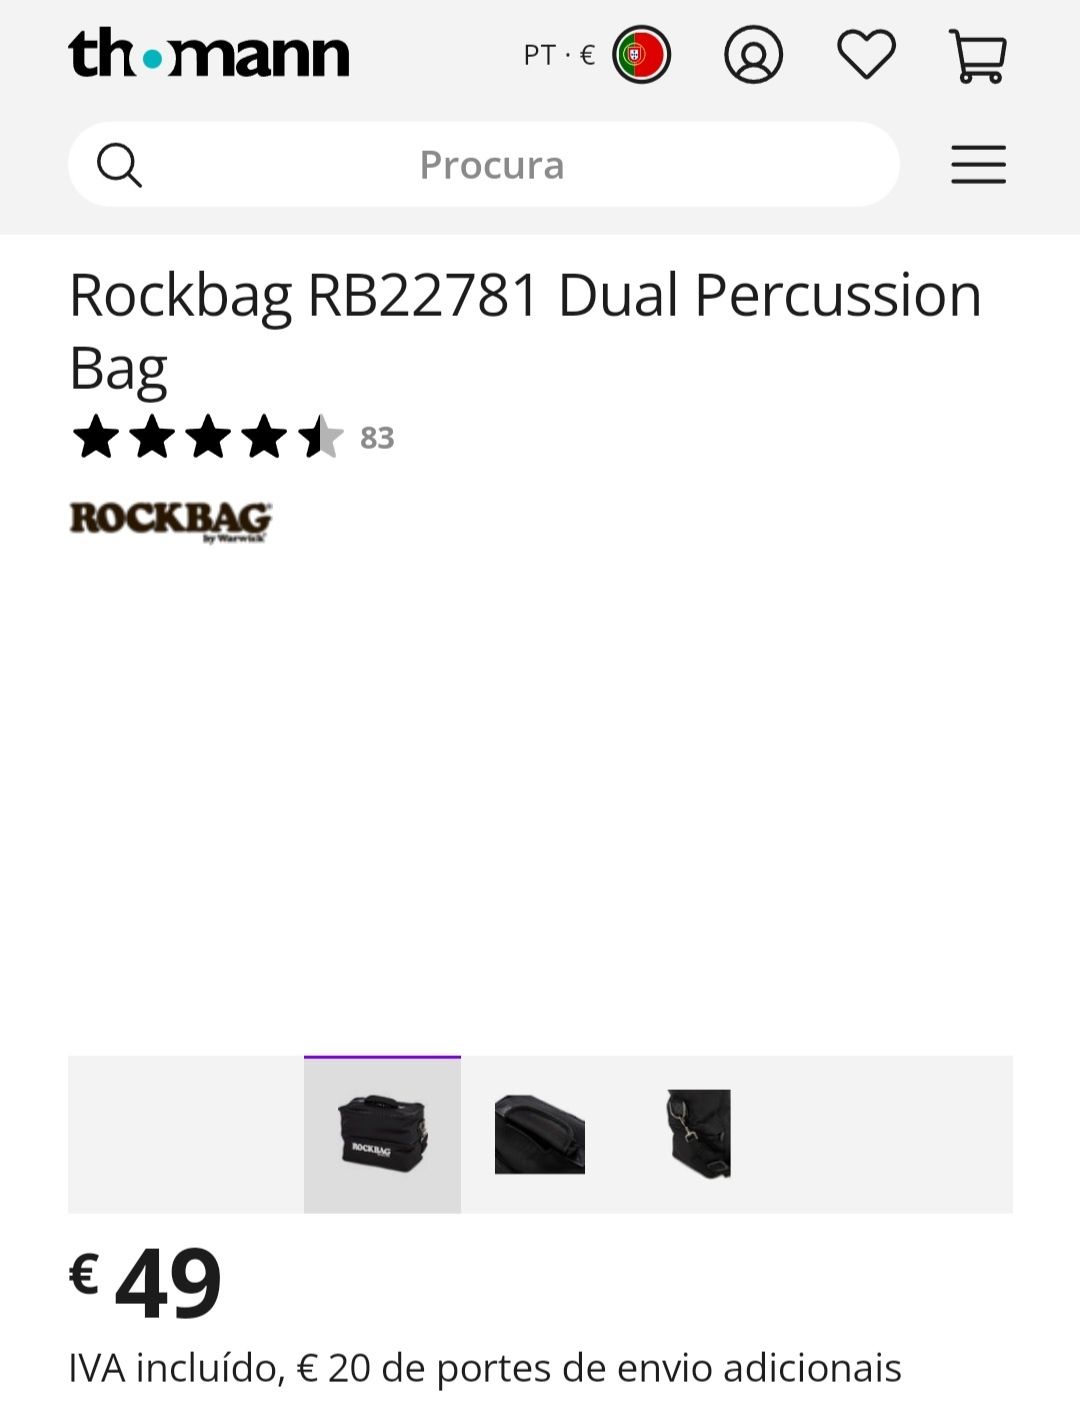 Rock bag dual percussion Thomann Gmbh novo